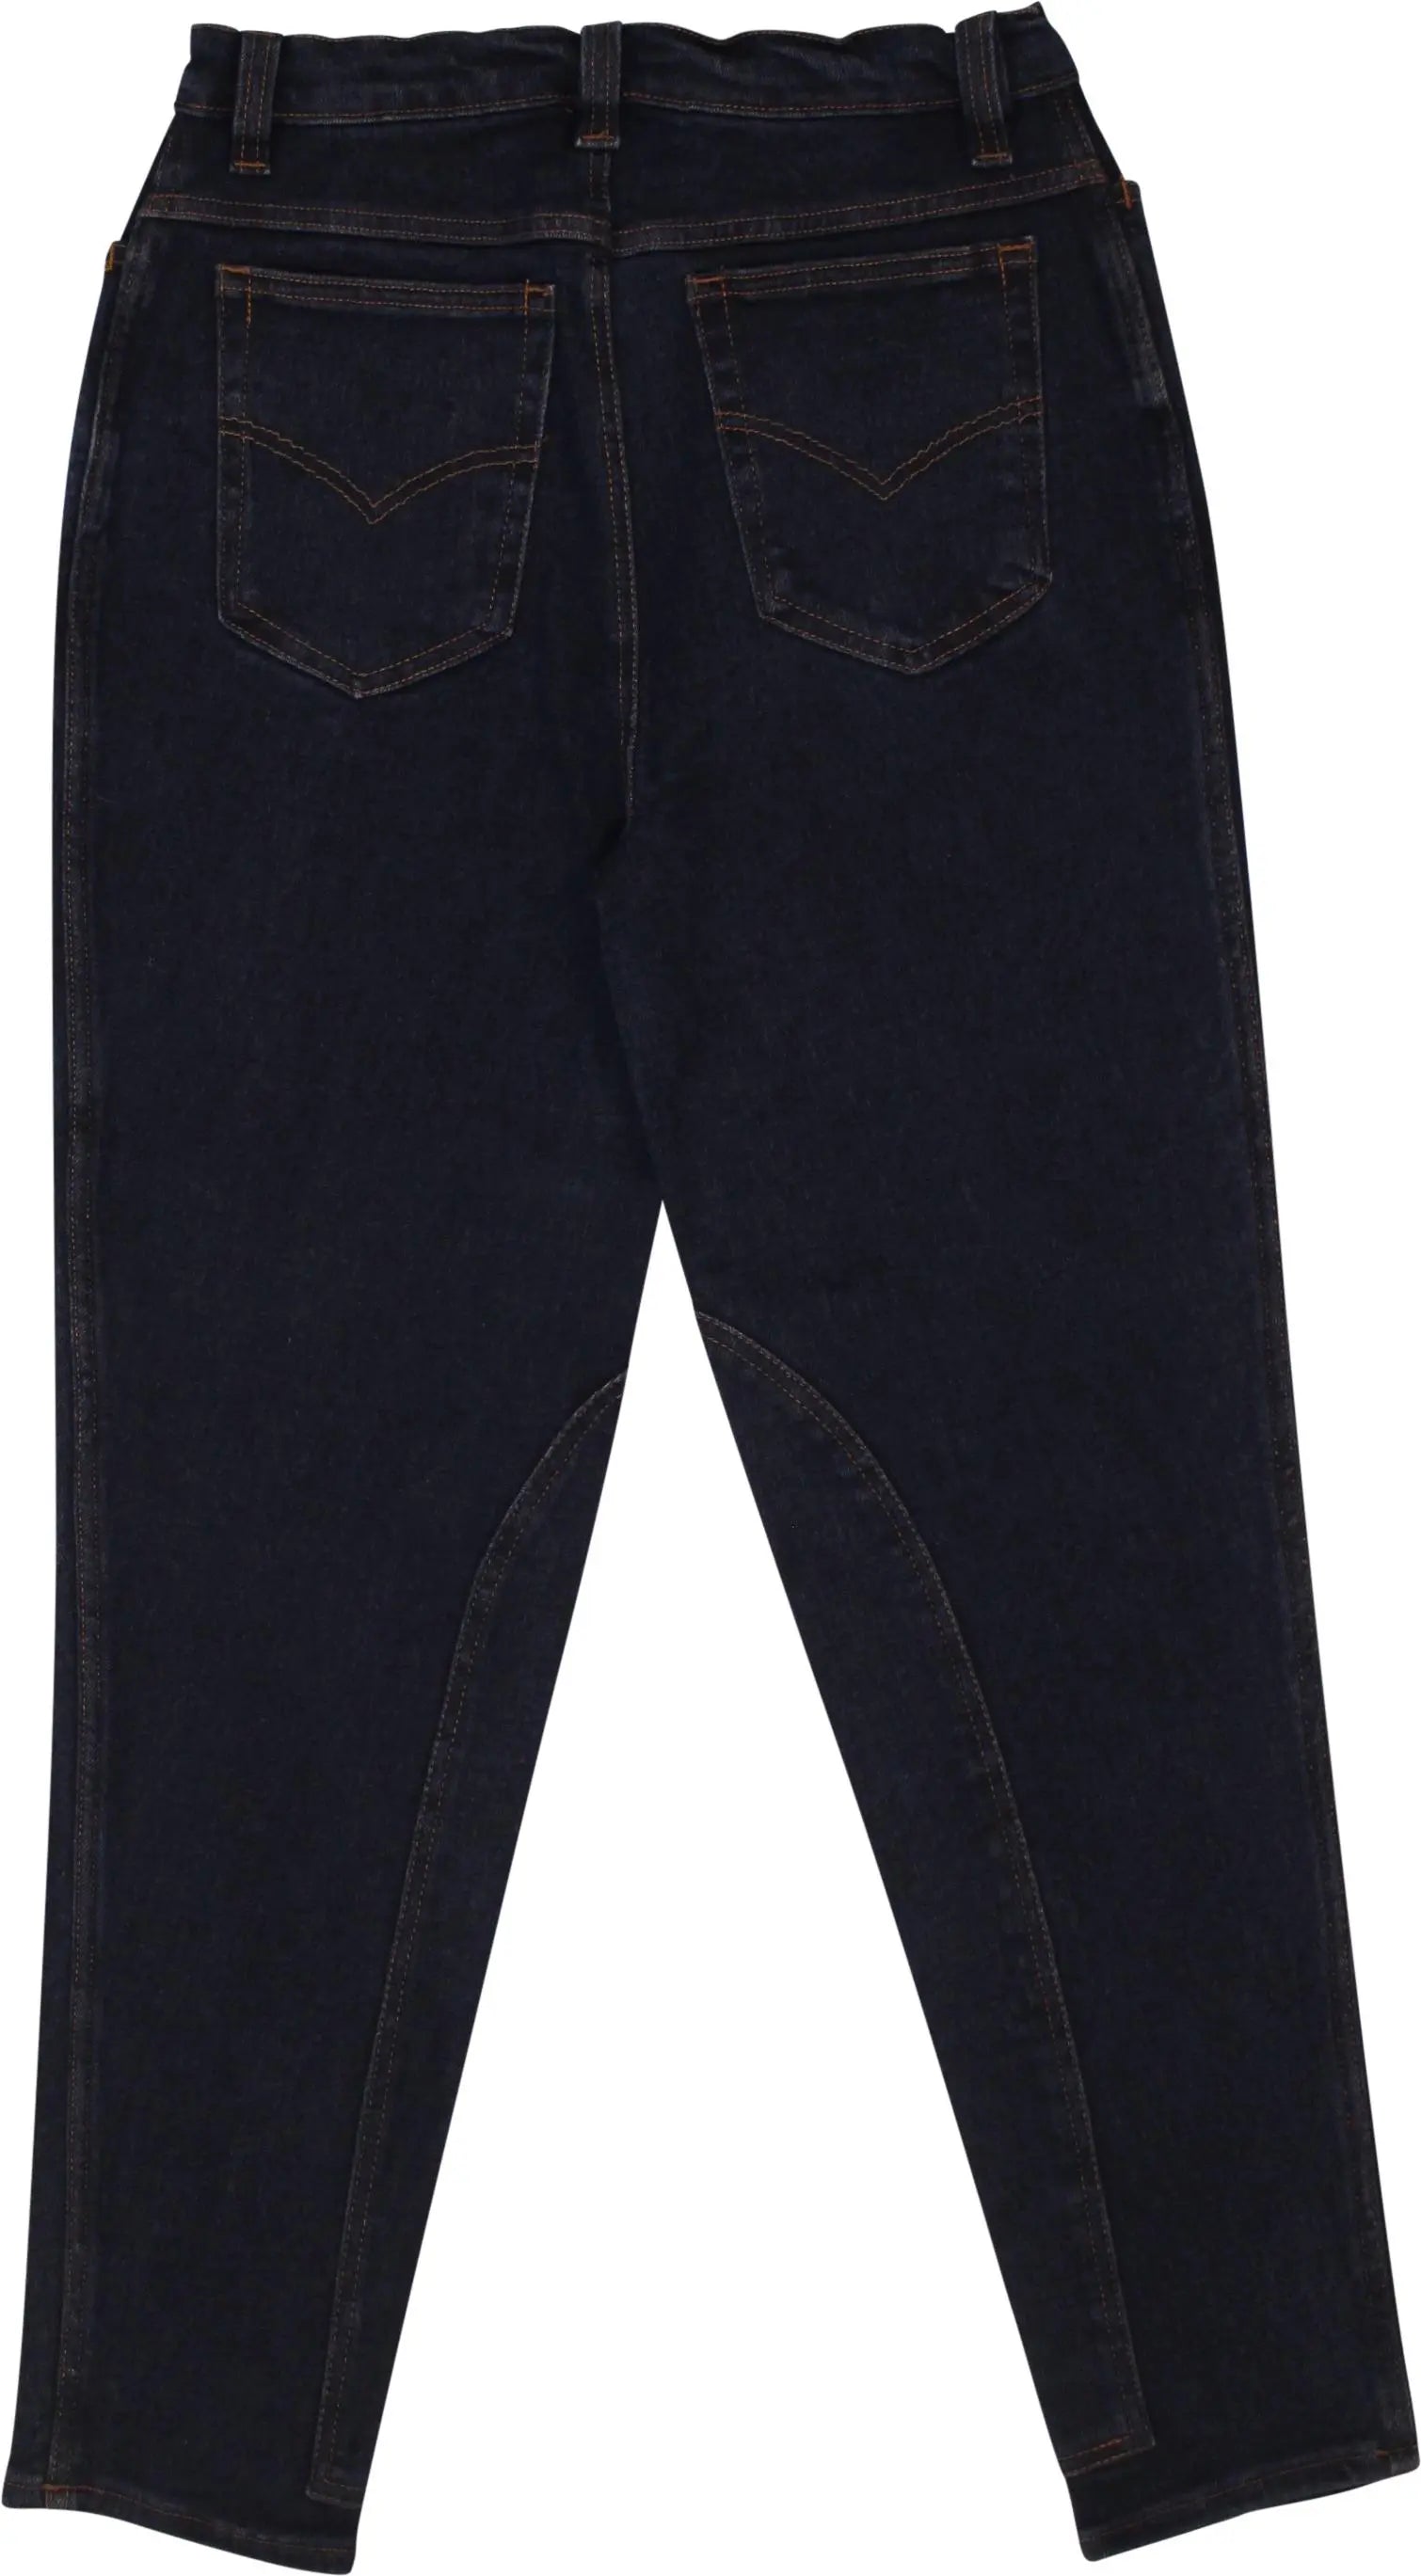 Elt - Mom Jeans- ThriftTale.com - Vintage and second handclothing